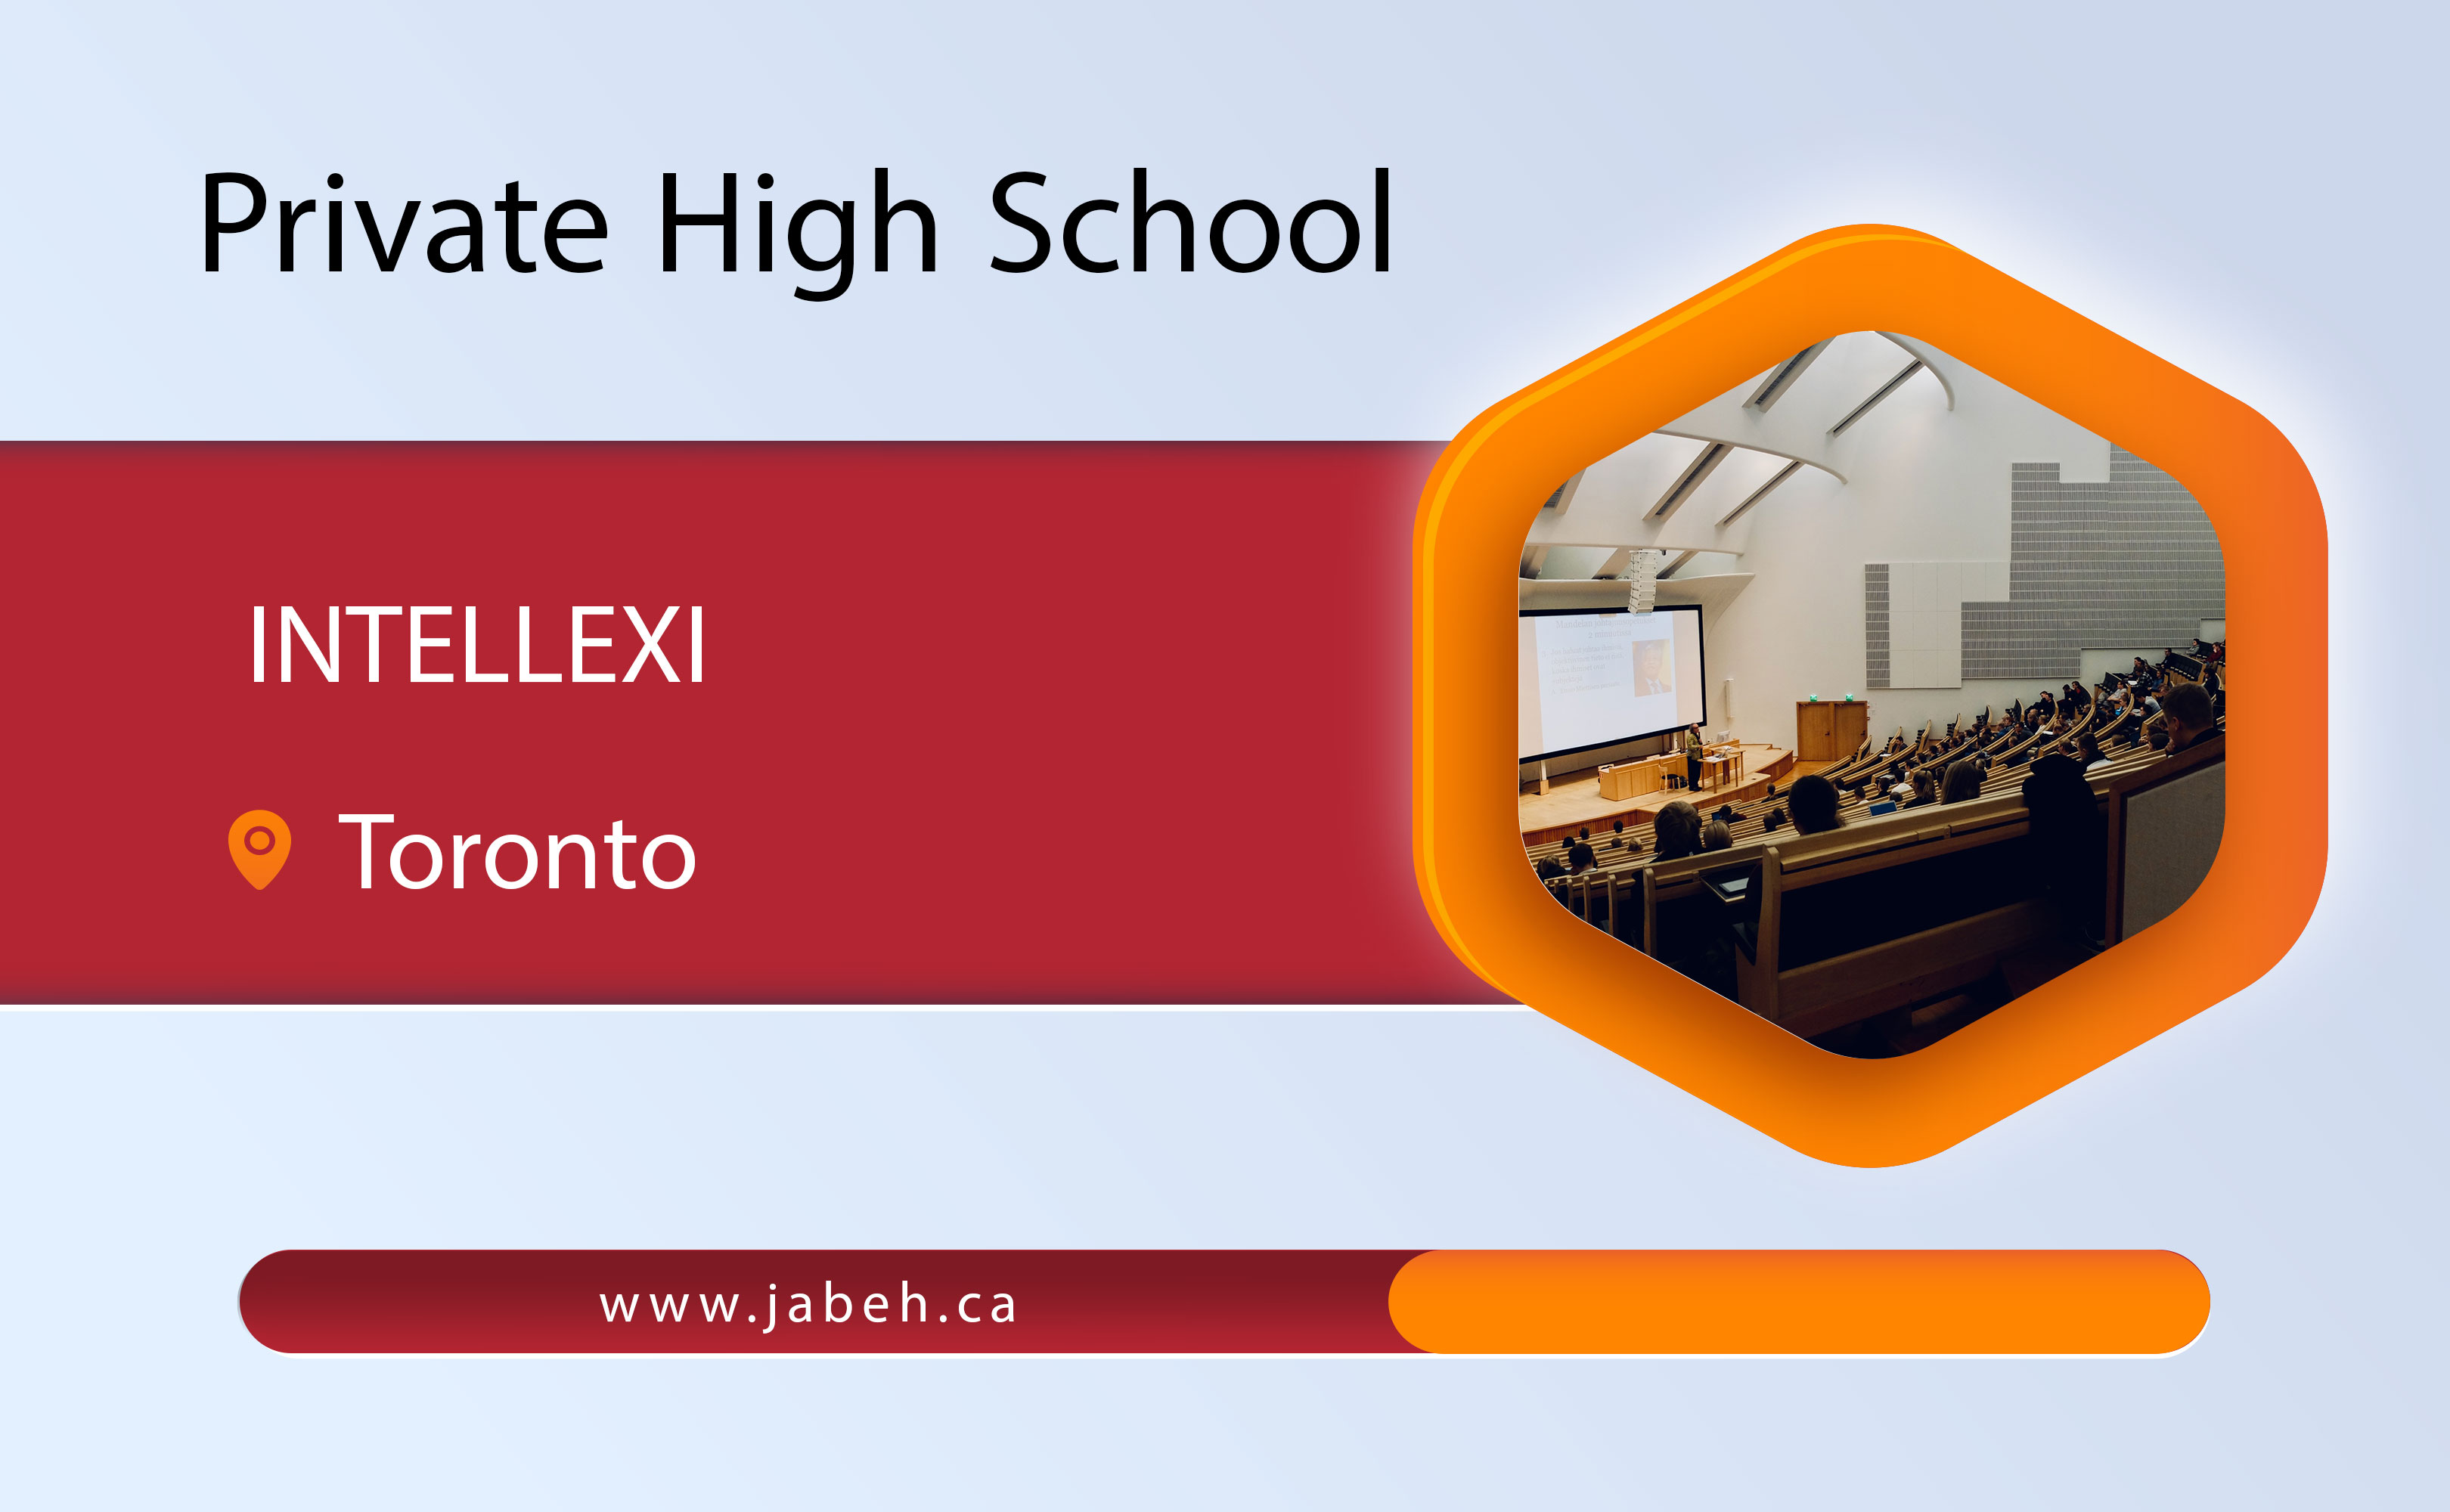 INTELLEXI Iranian private school and high school in Toronto